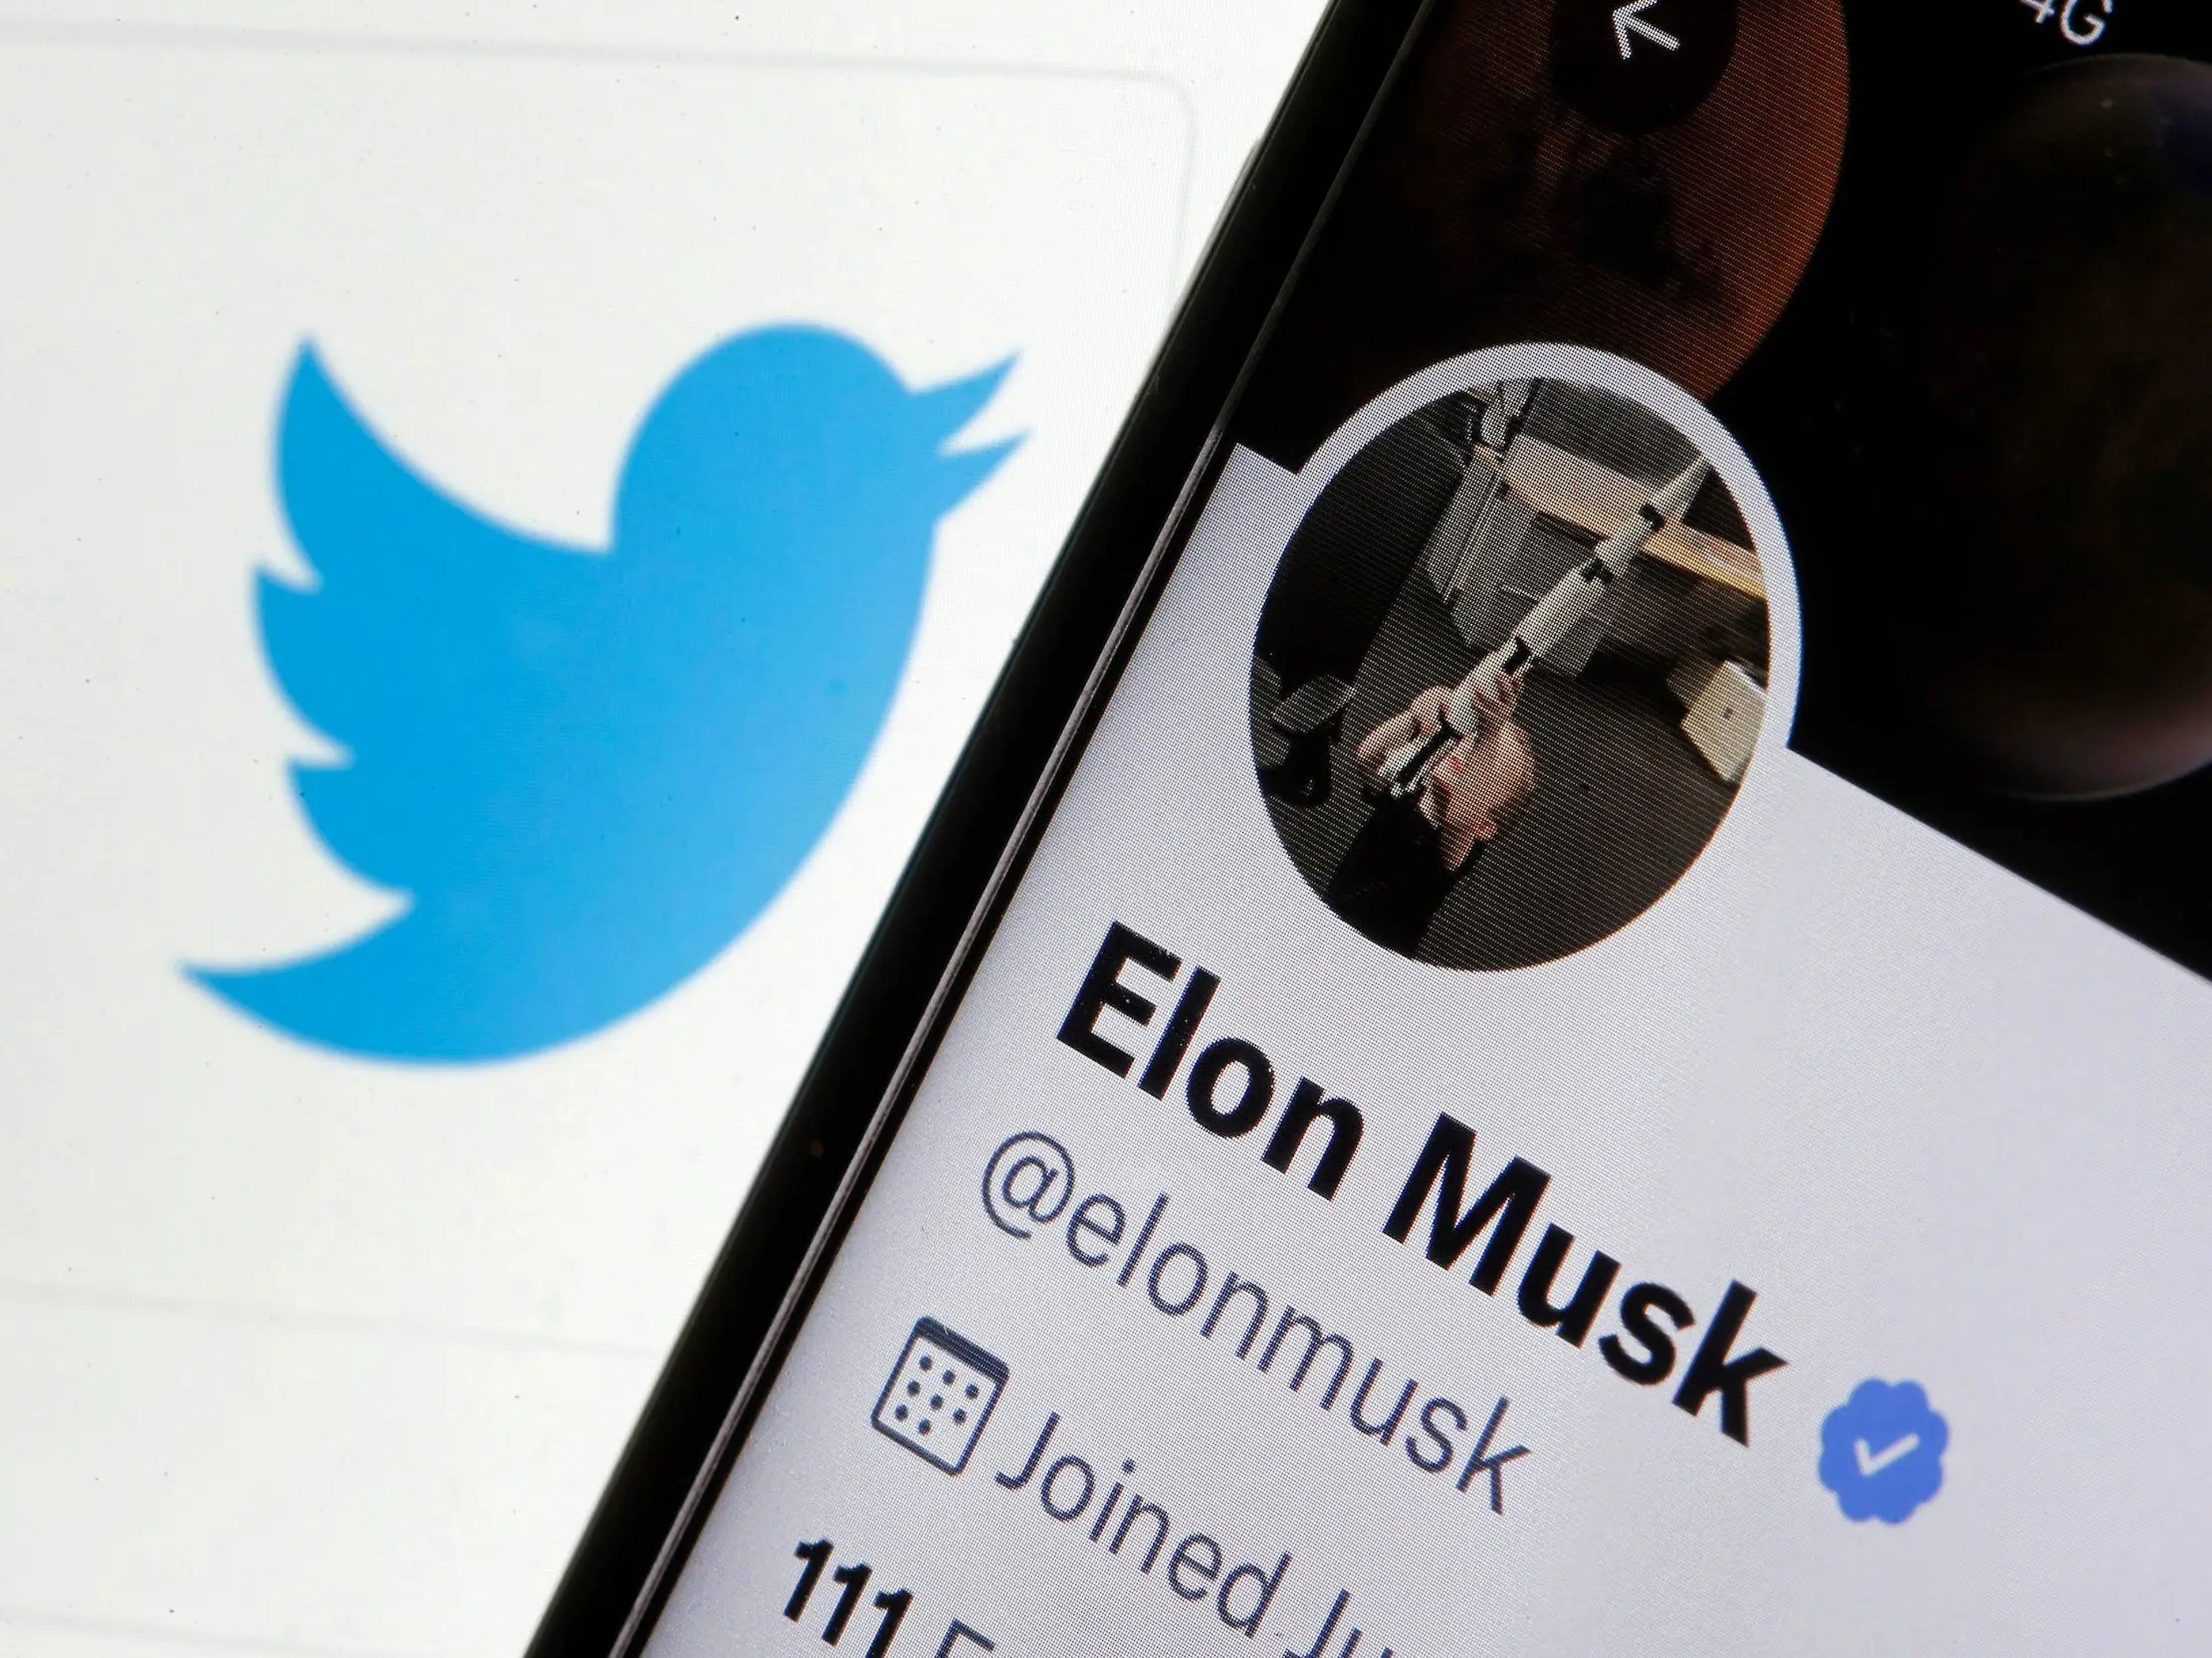 Perfil de Twitter del nuevo dueño de la red social, Elon Musk.